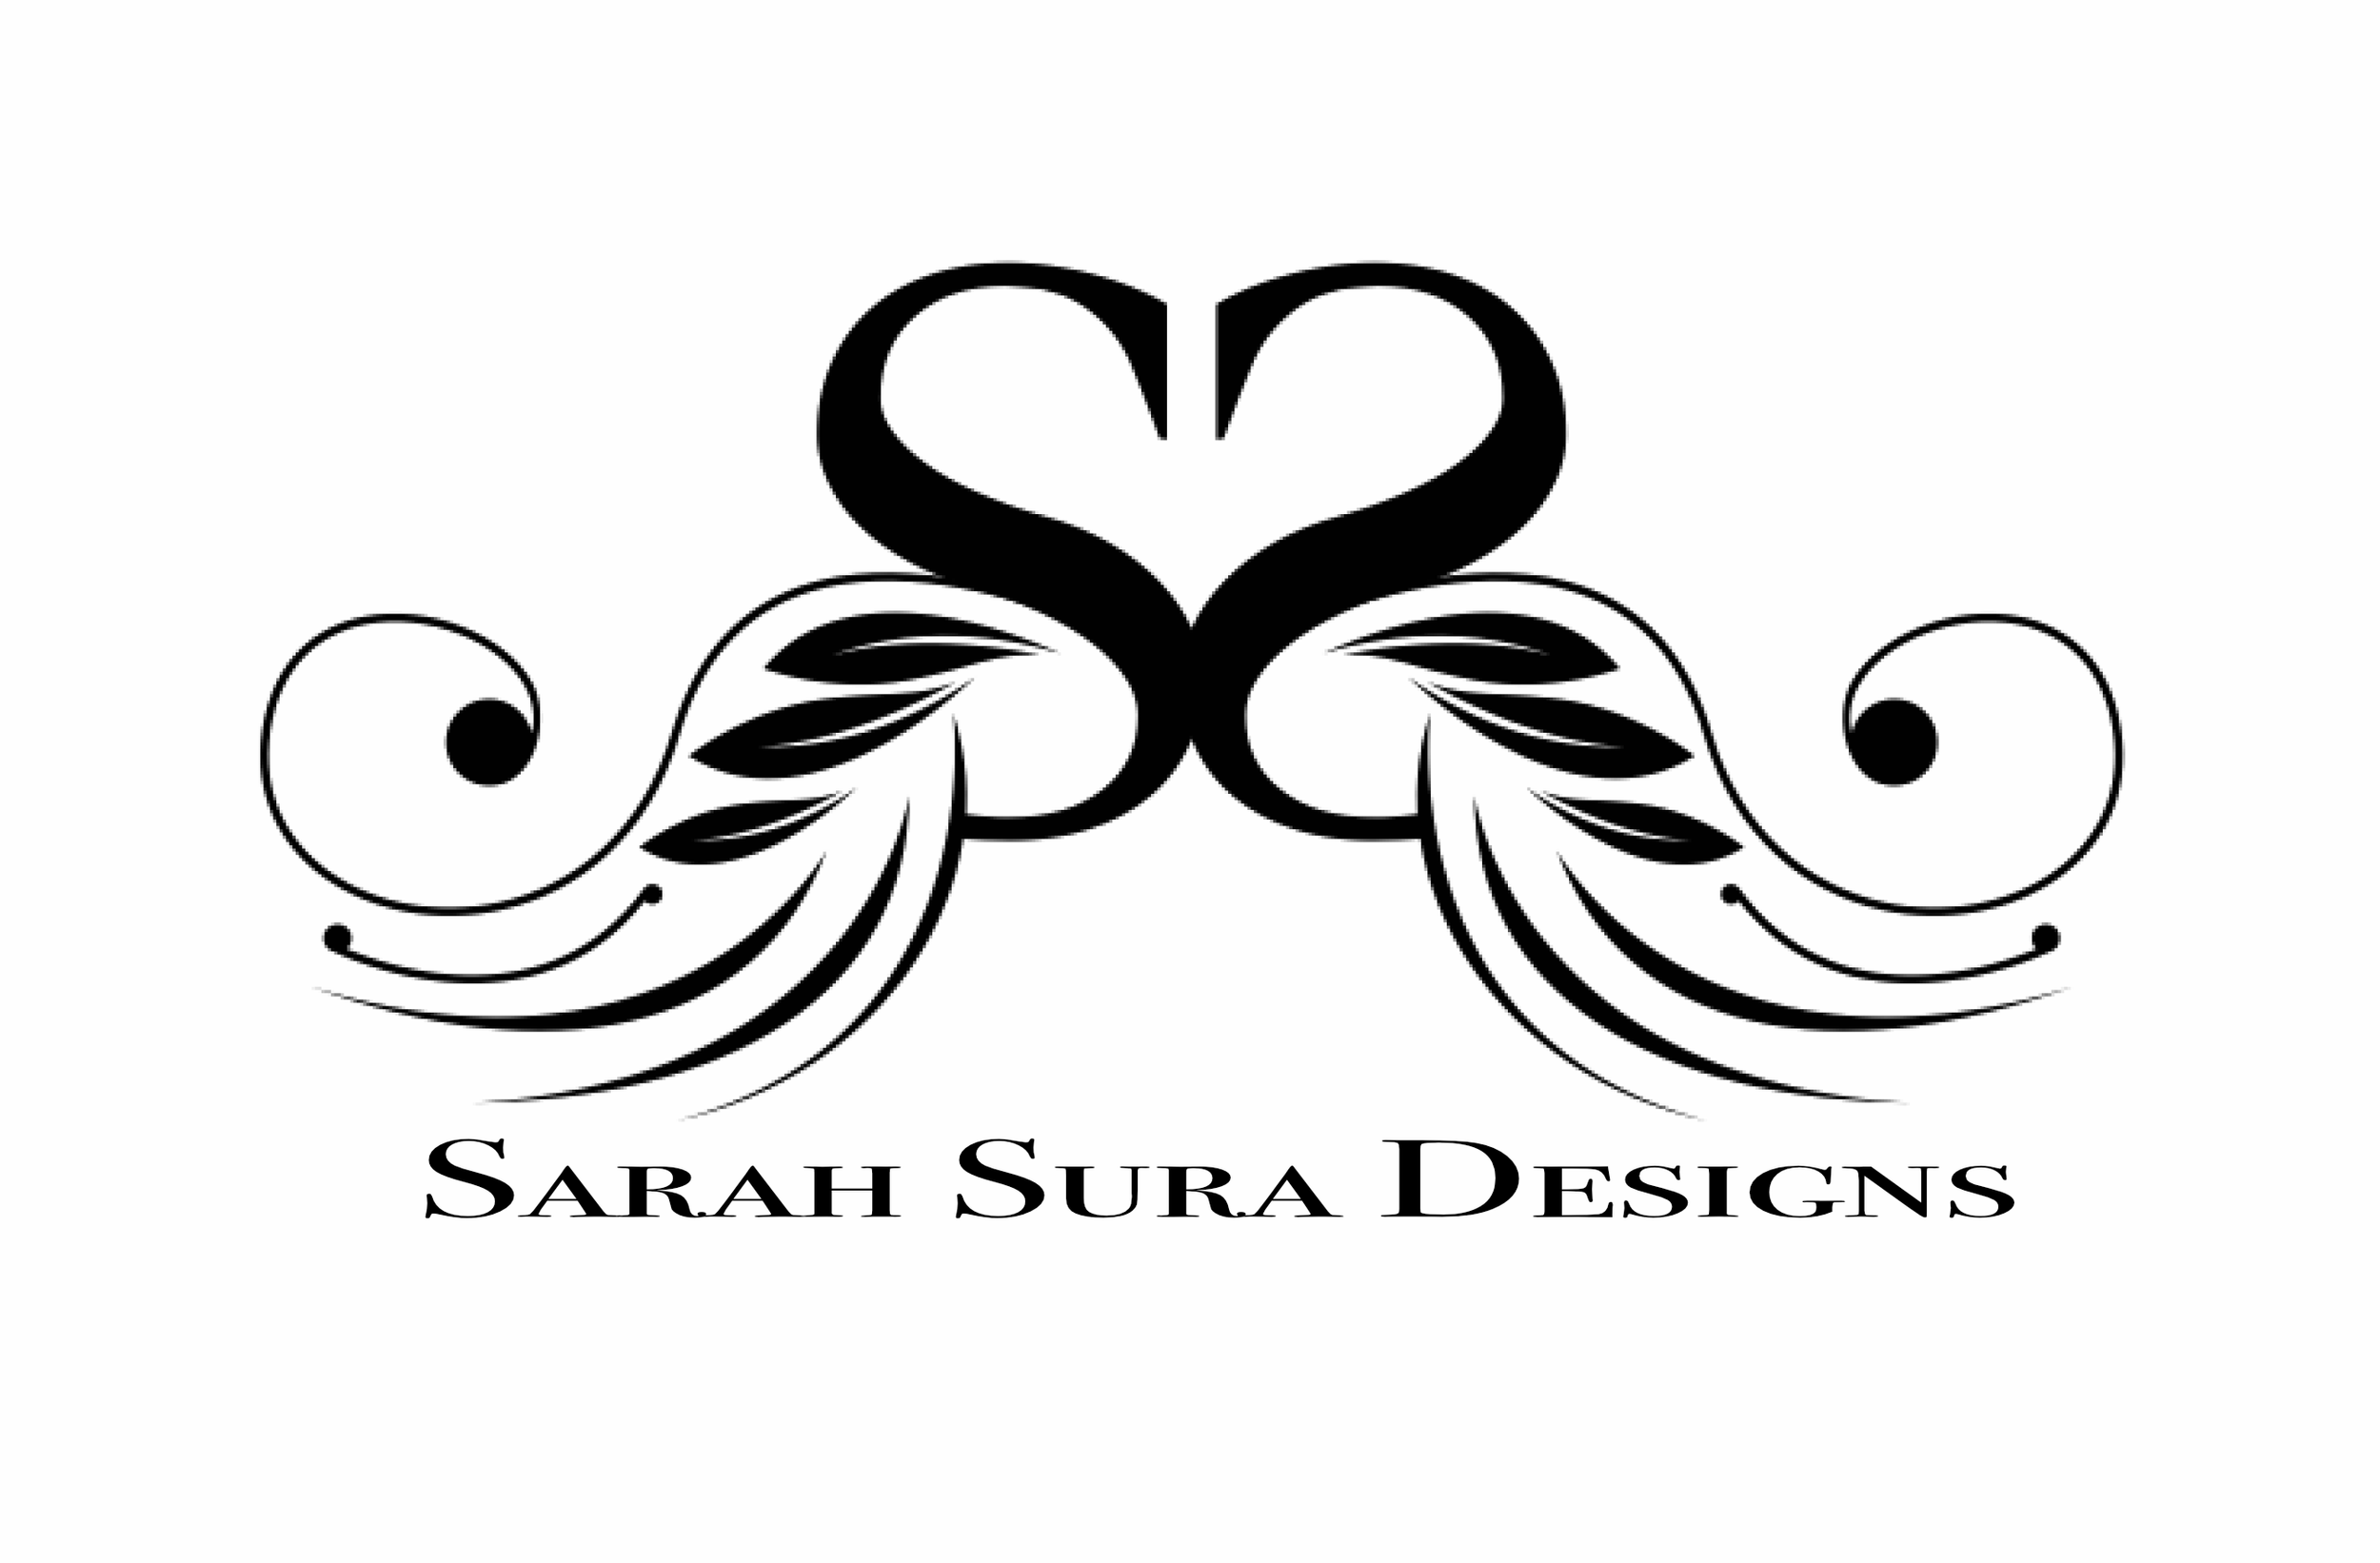 Sarah Sura Designs